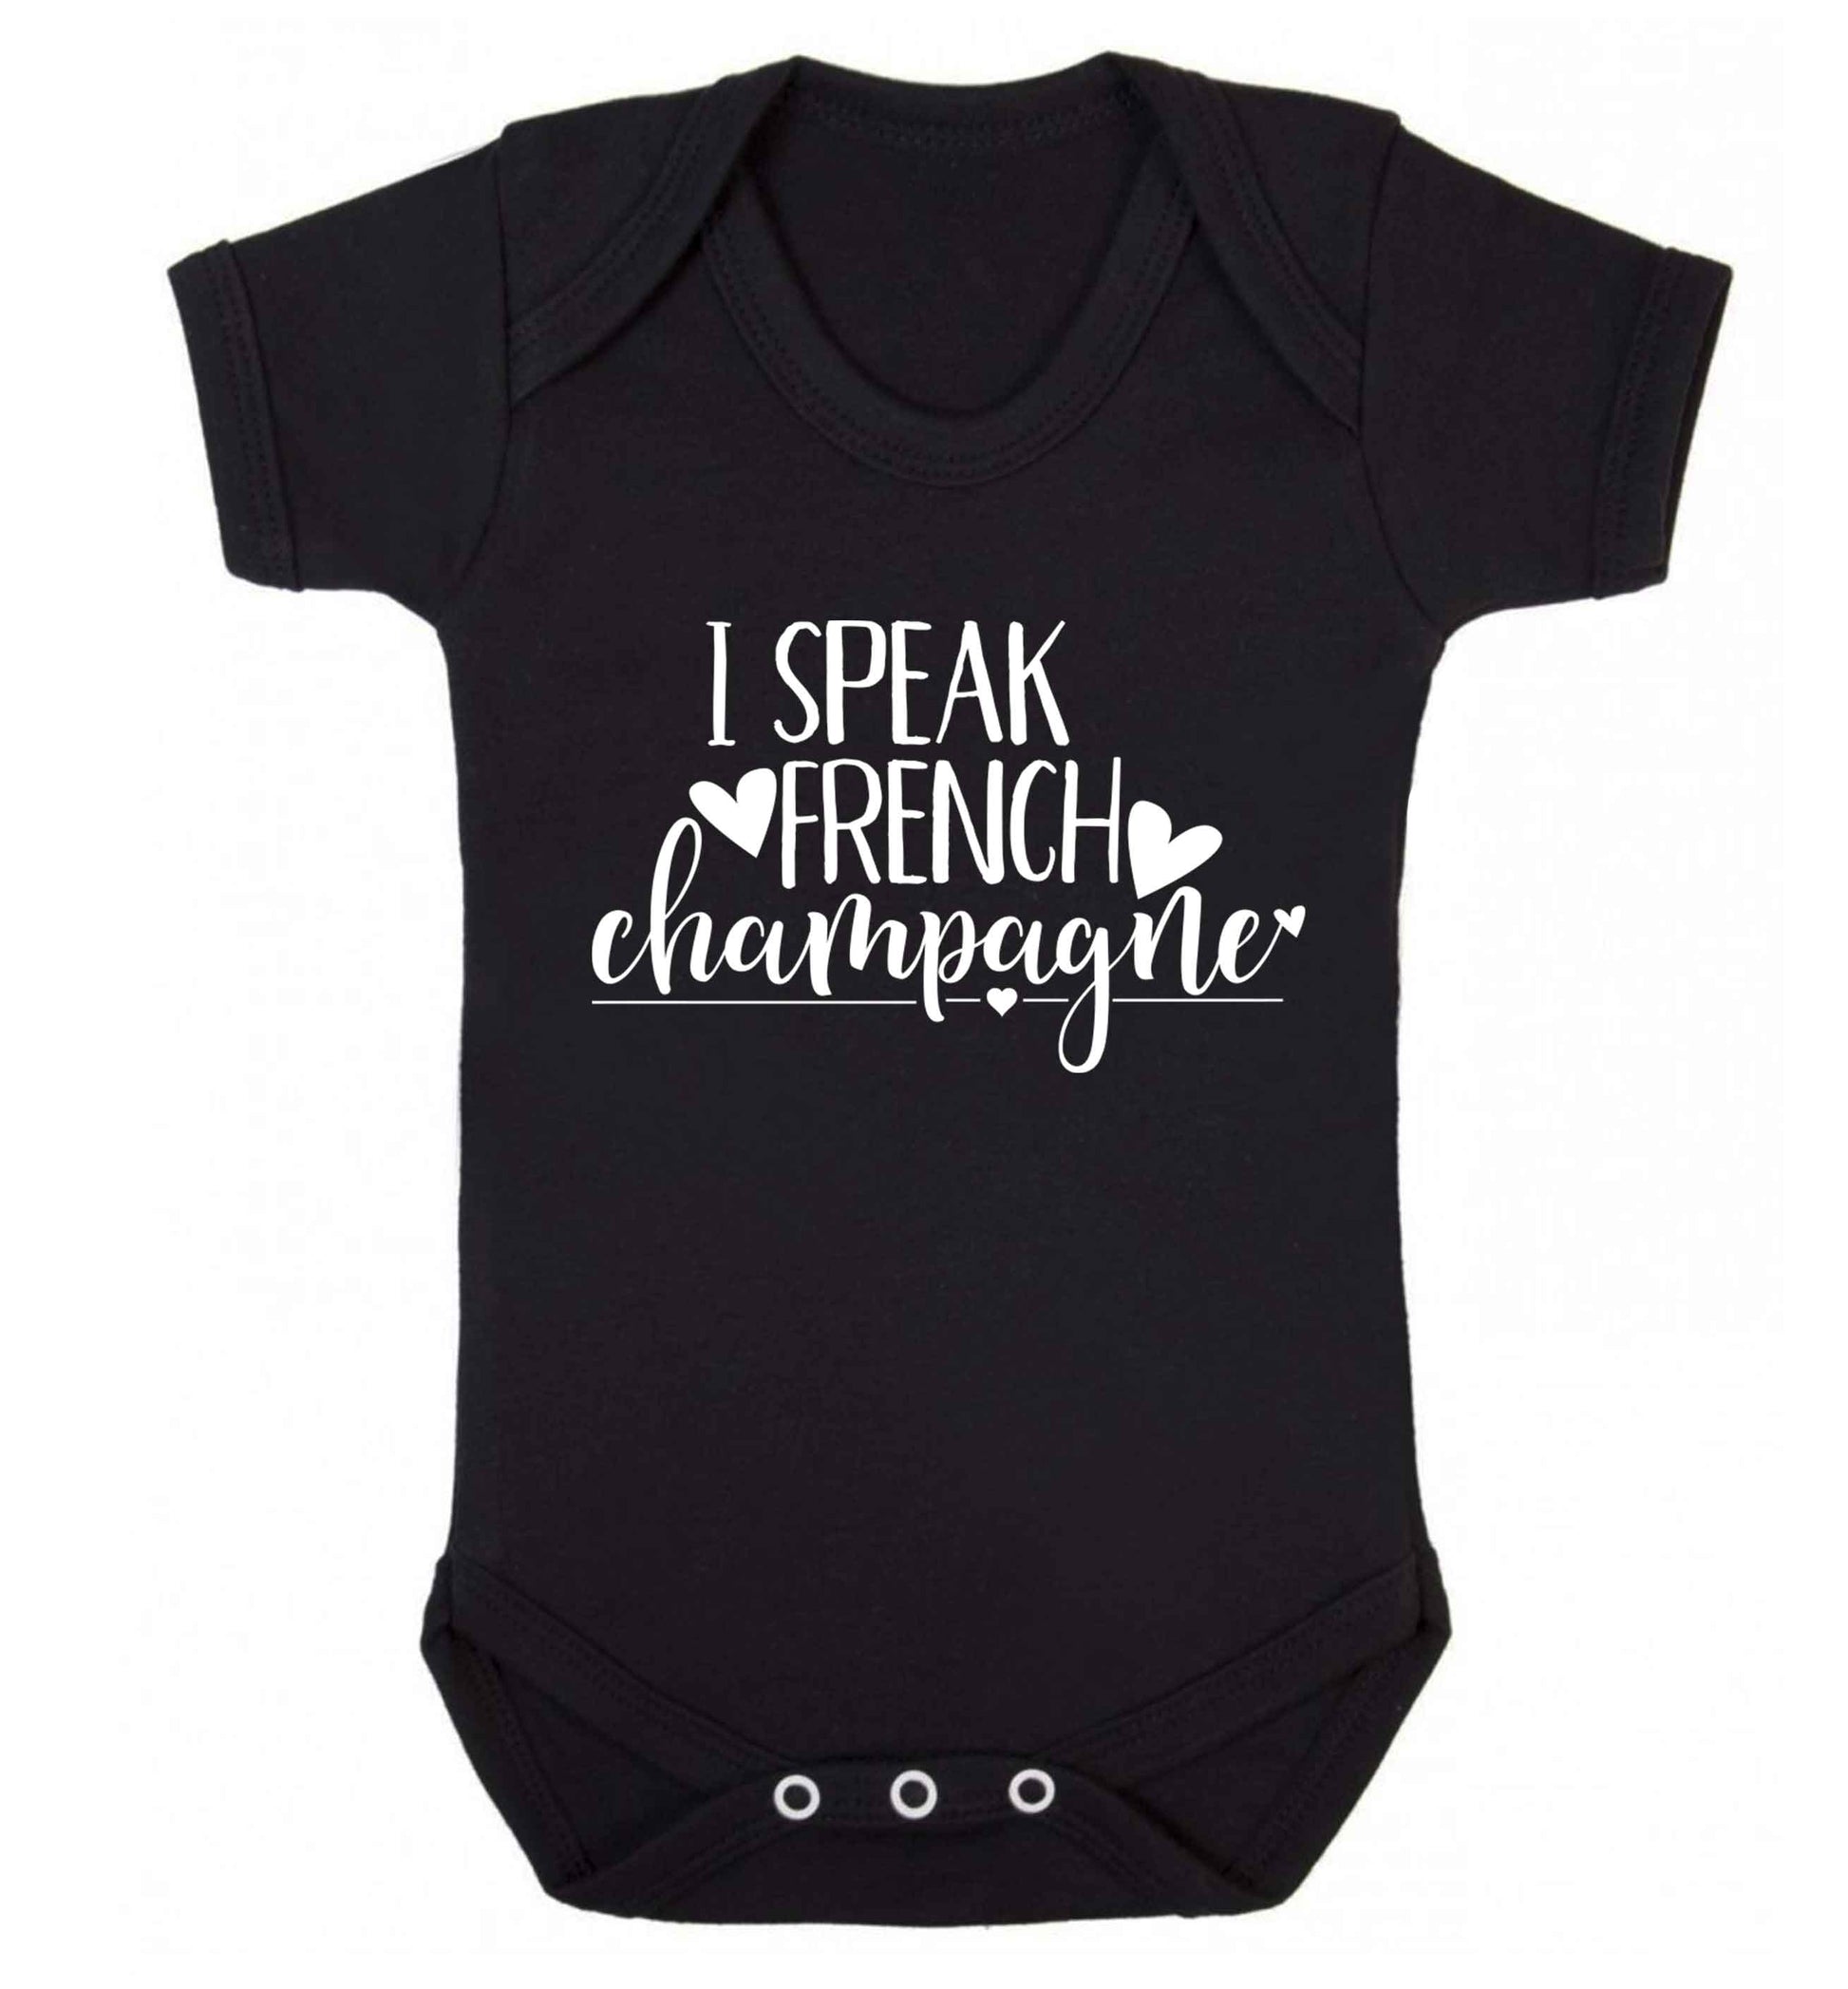 I speak french champagne Baby Vest black 18-24 months